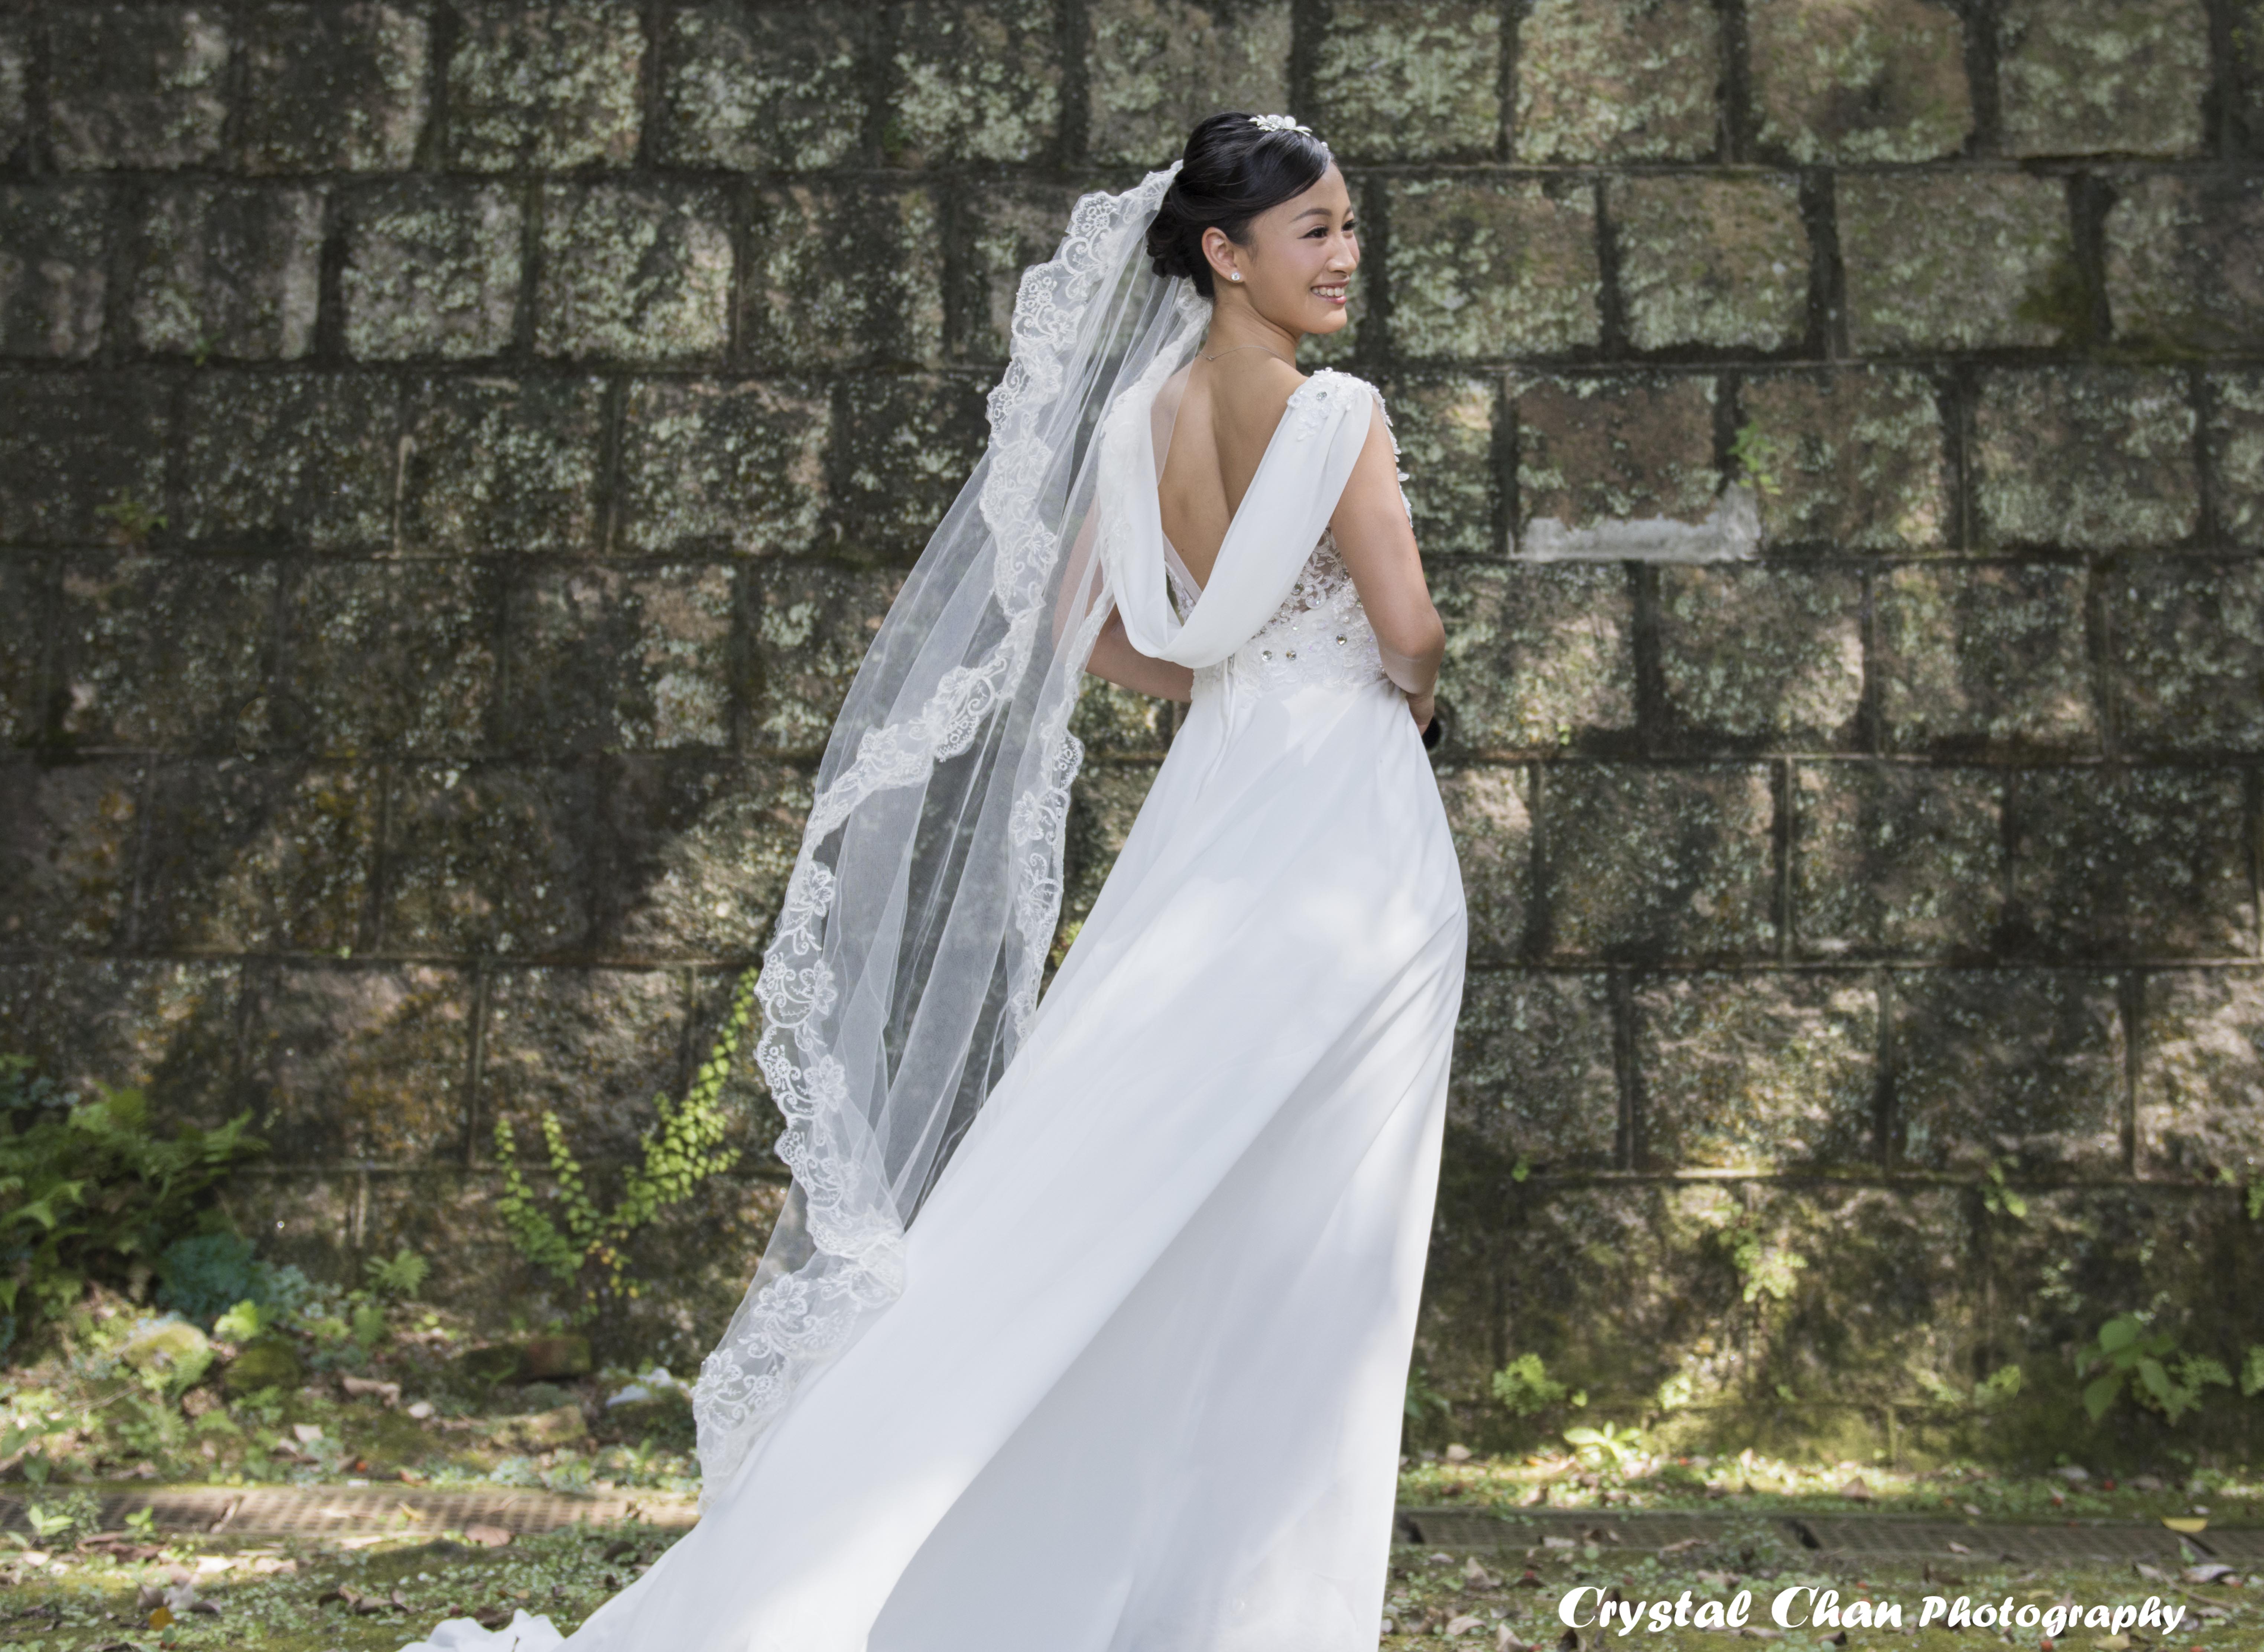 Crystal Chan之攝影師紀錄: 婚紗外景攝影